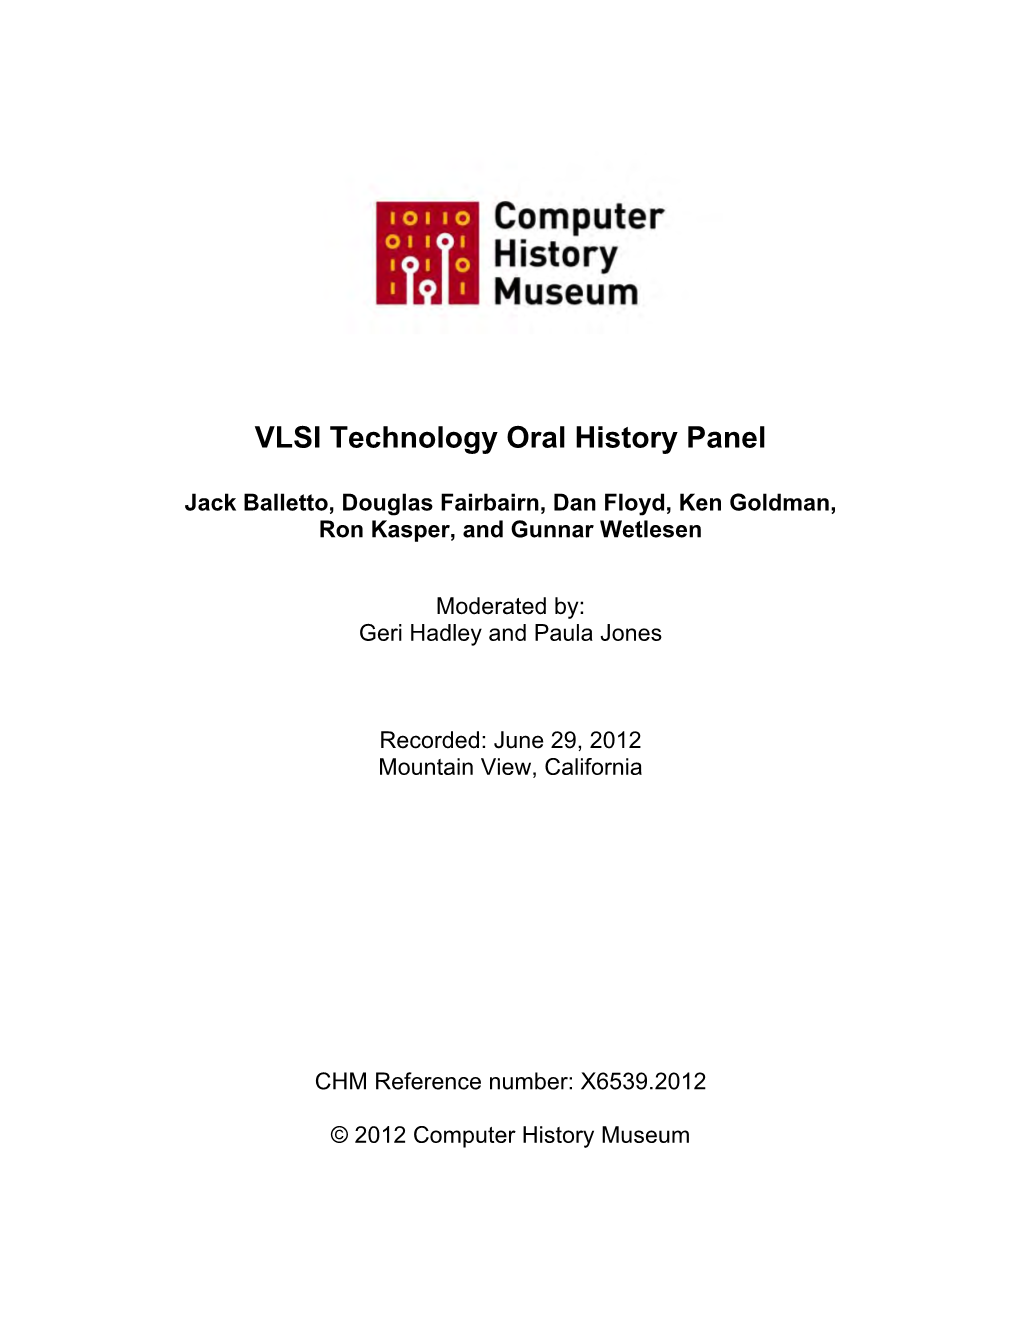 VLSI Technology Oral History Panel; 2012-06-29